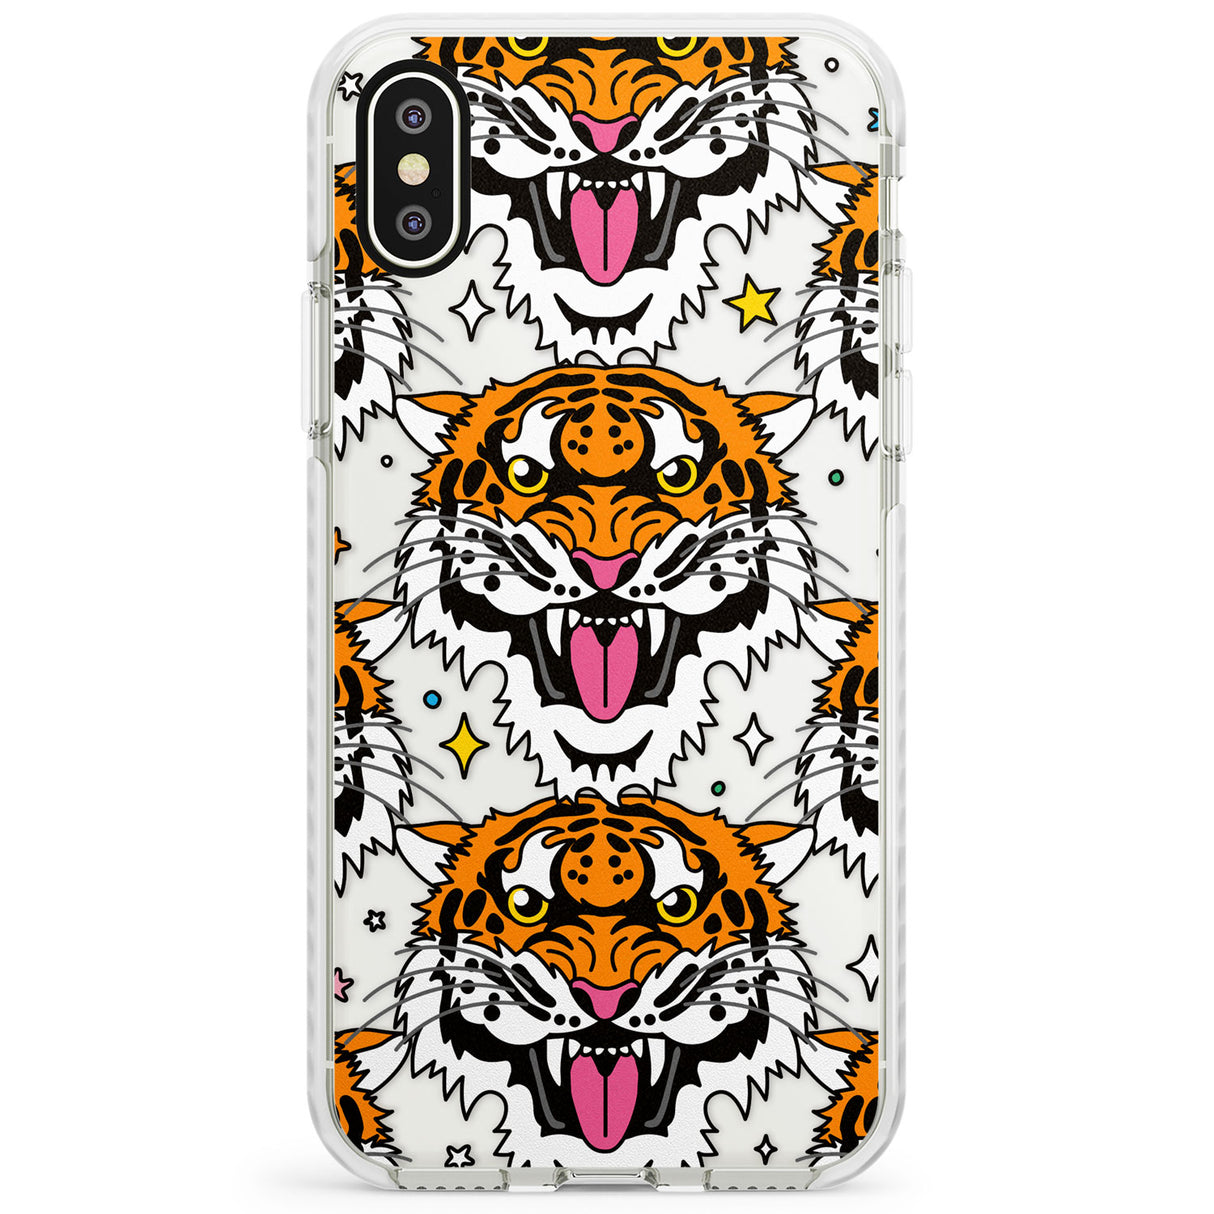 Fierce Jungle Tigers Impact Phone Case for iPhone X XS Max XR